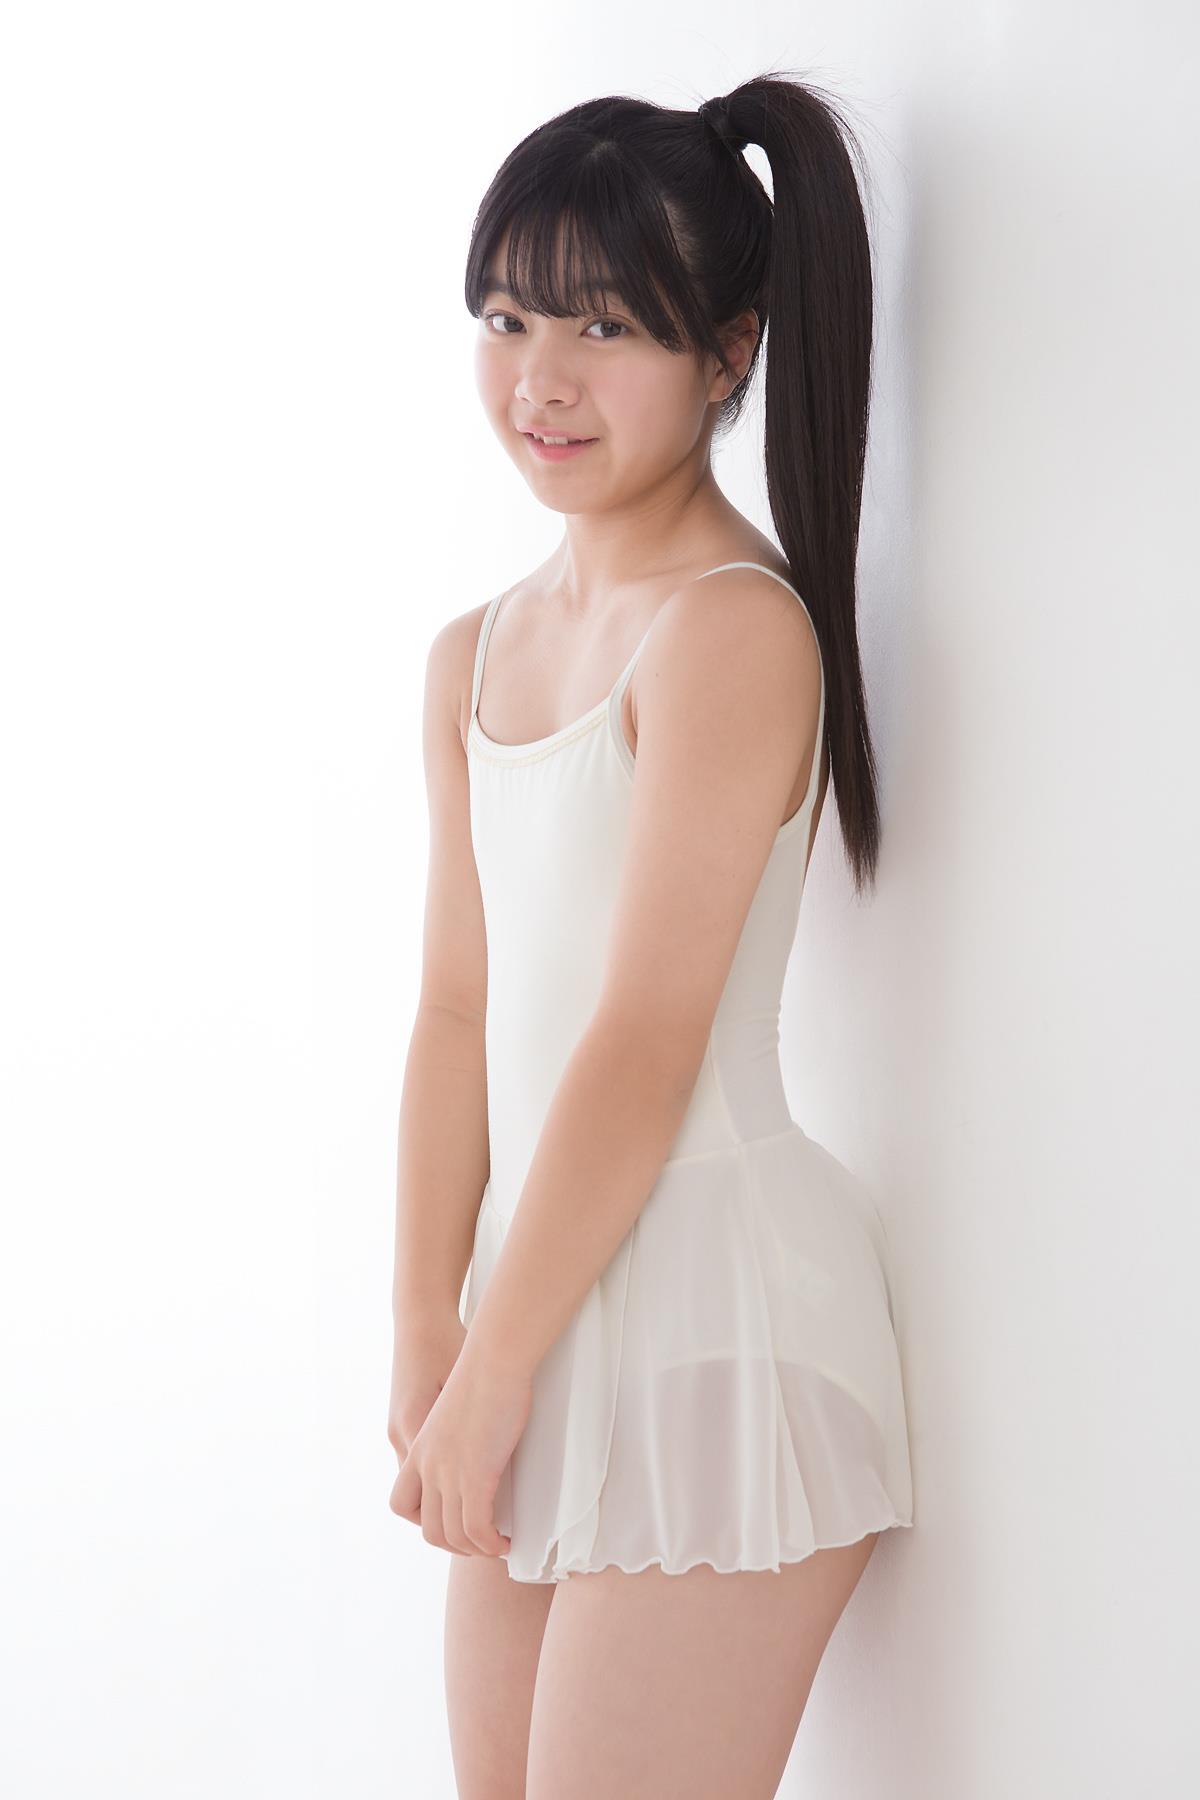 Minisuka.tv Saria Natsume 夏目咲莉愛 - Premium Gallery 2.2 - 33.jpg